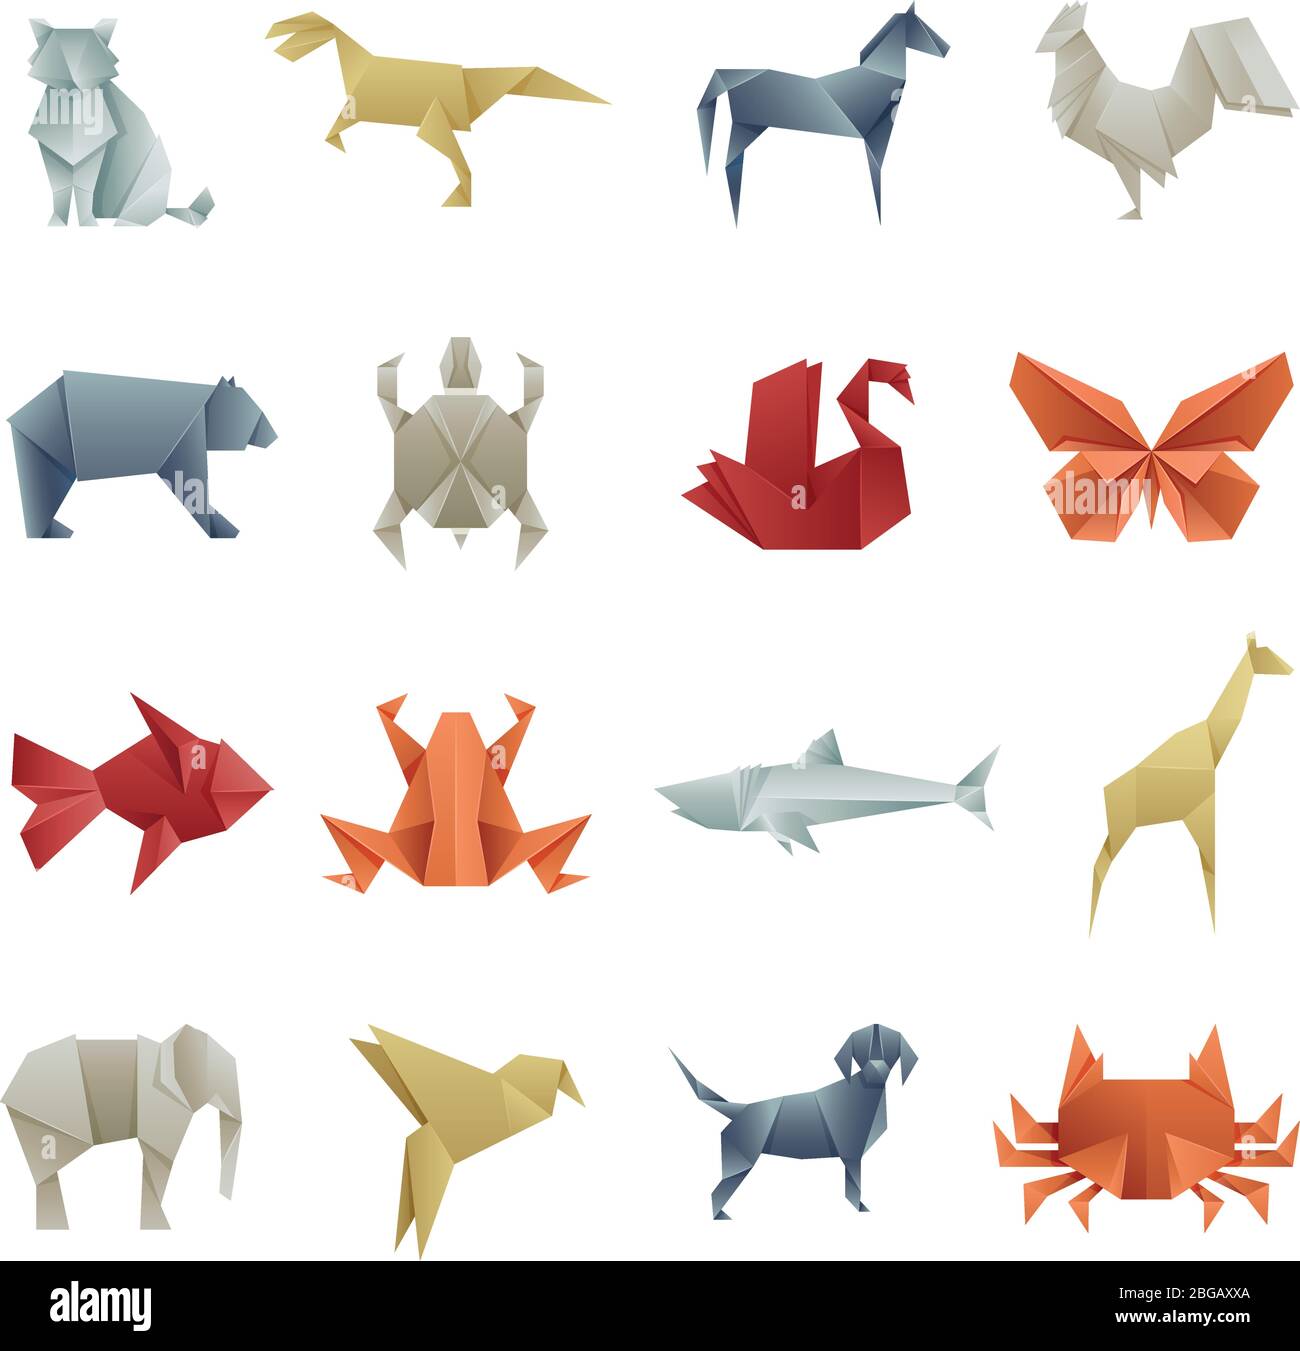 Origami papier animaux asian Creative Vector Art. Origami japon animal  papillon et ours, tortue et girafe illustration Image Vectorielle Stock -  Alamy